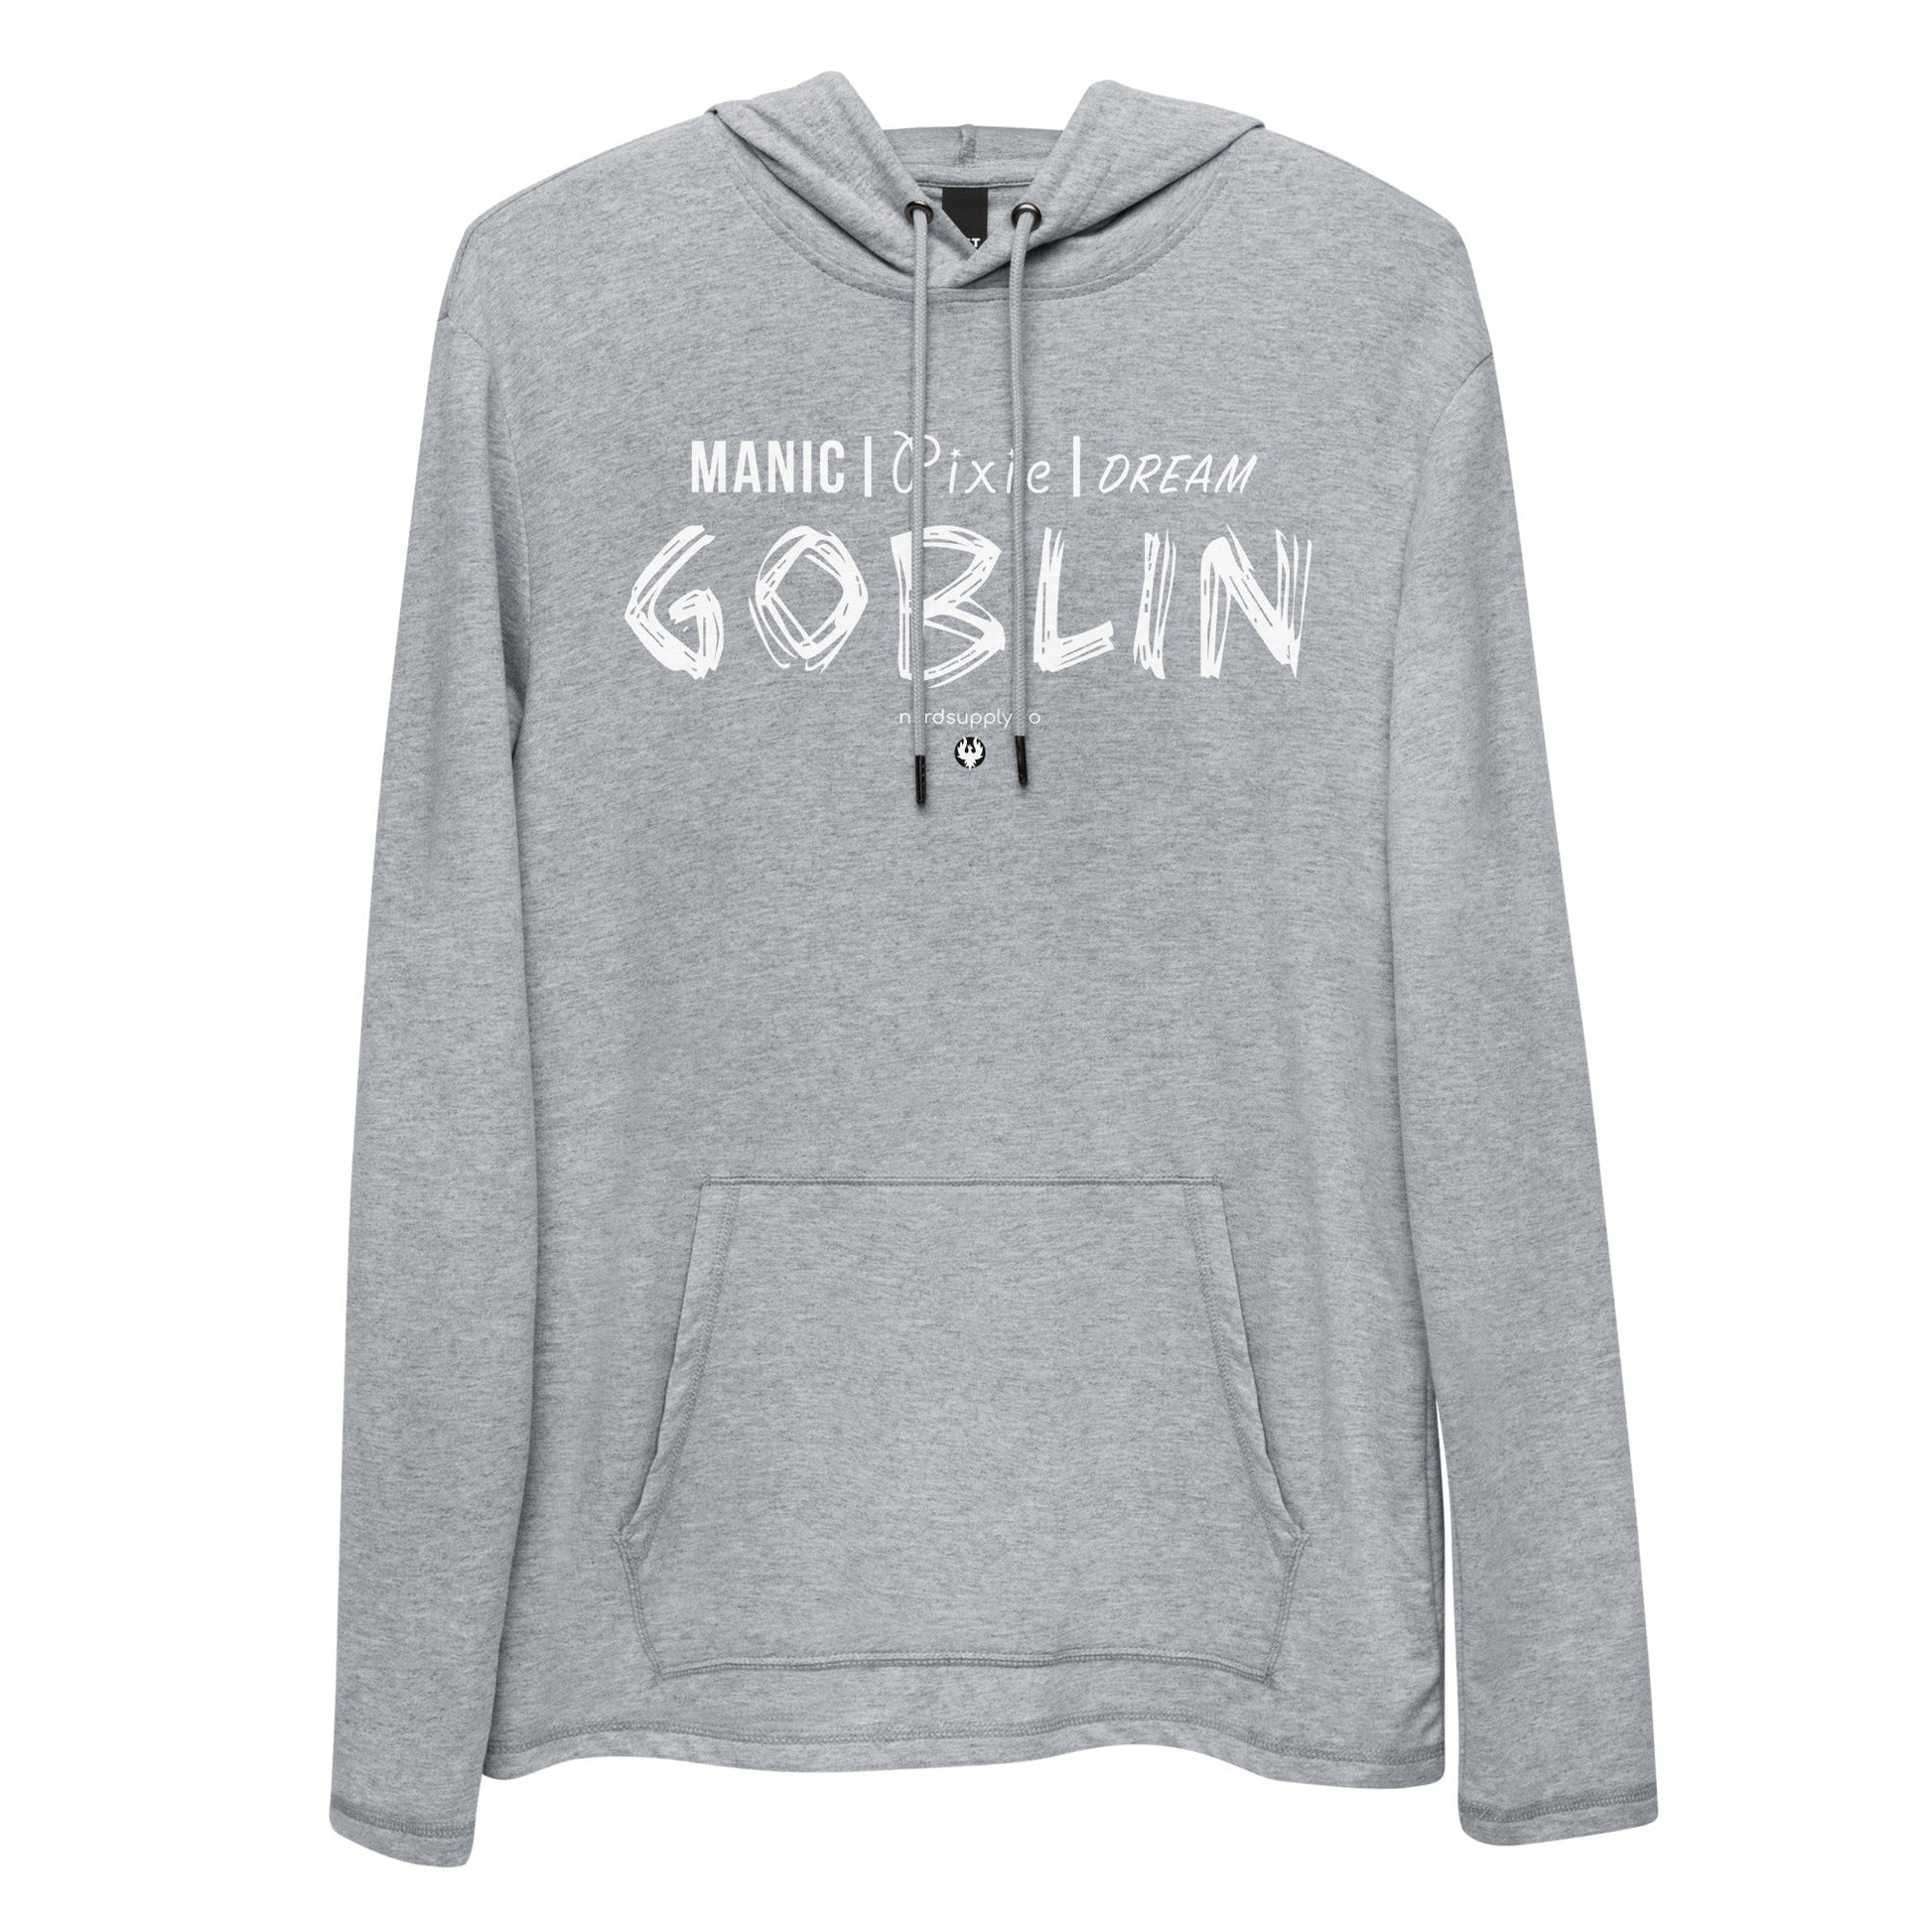 "Manic Pixie Dream GOBLIN" - hoodie - The Nerd Supply Company